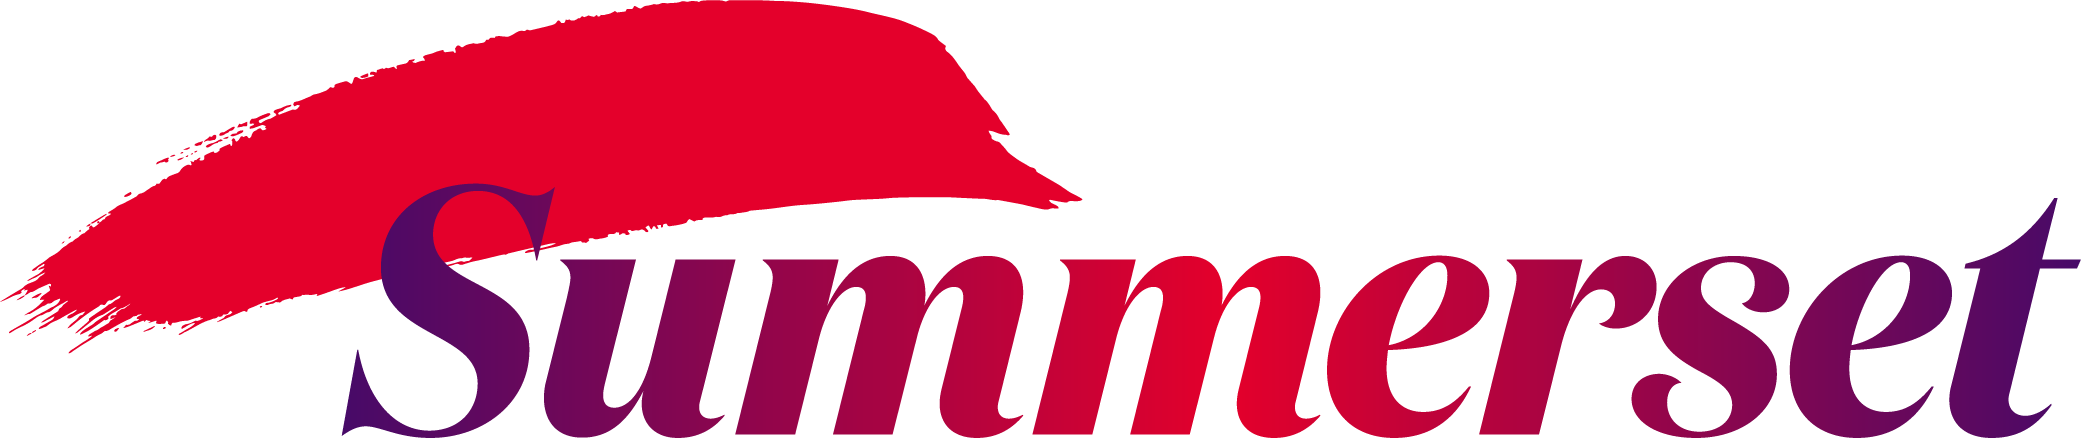 Summerset at Wigram logo